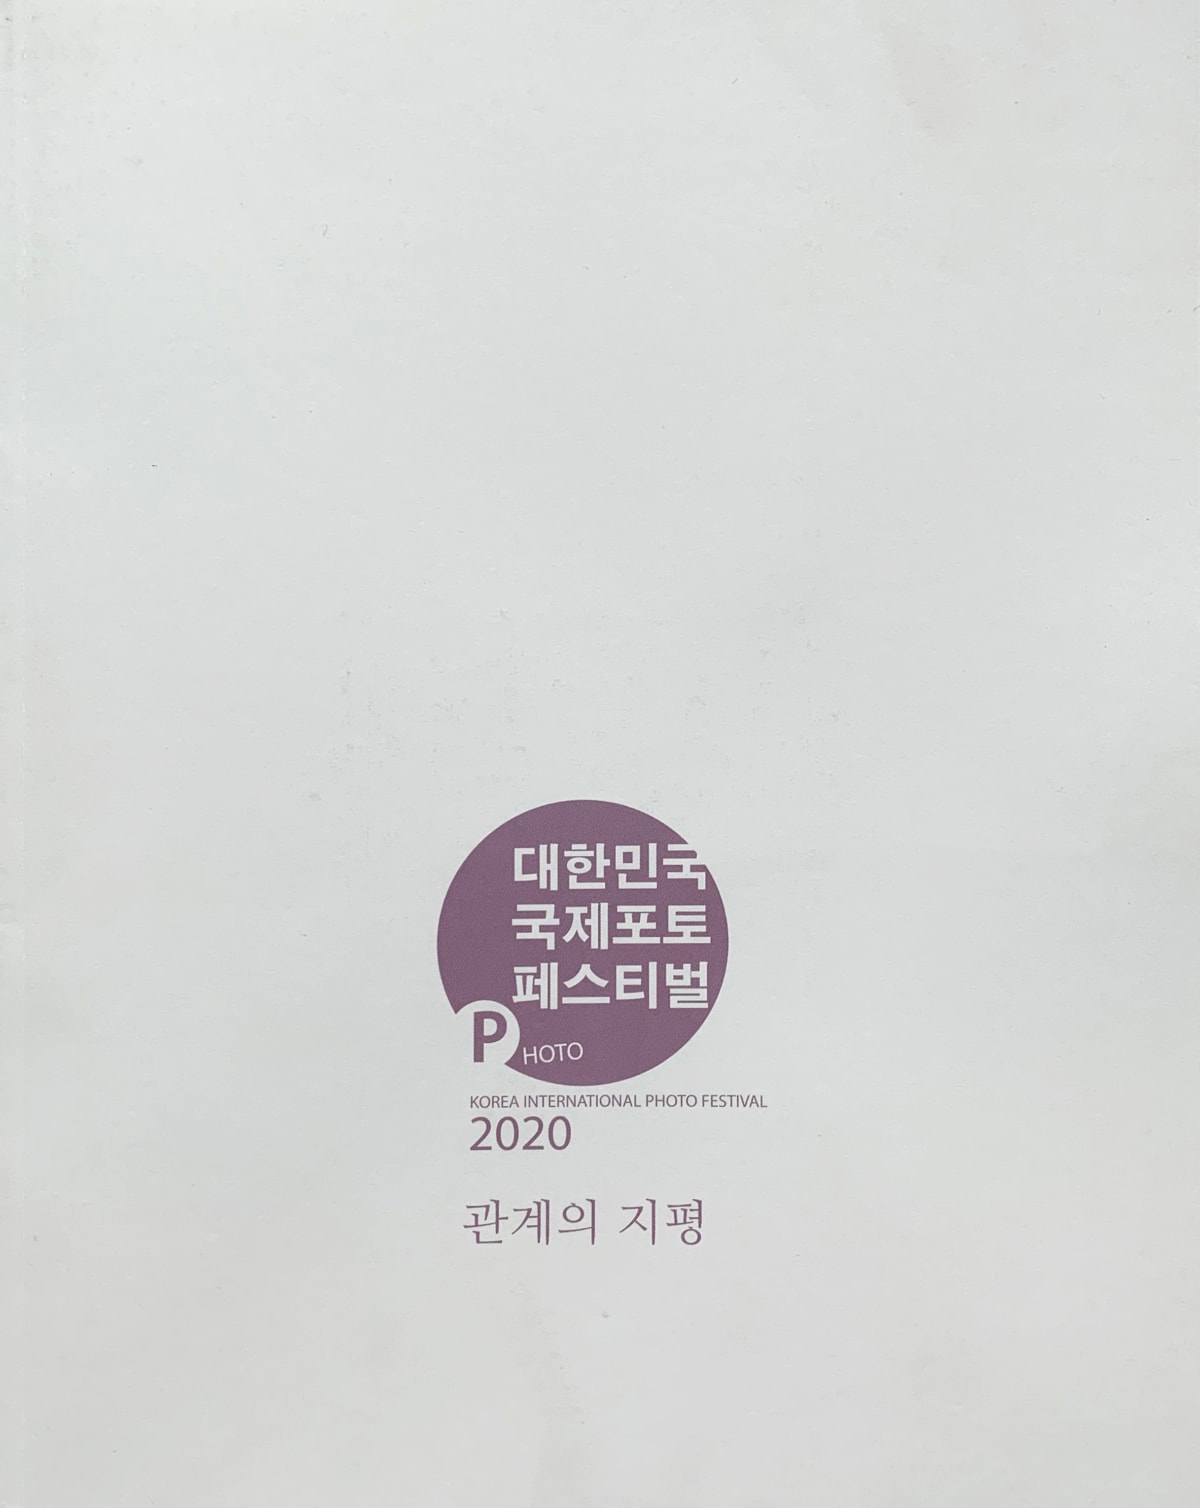 The 7th Korea International Photo Festival 2020